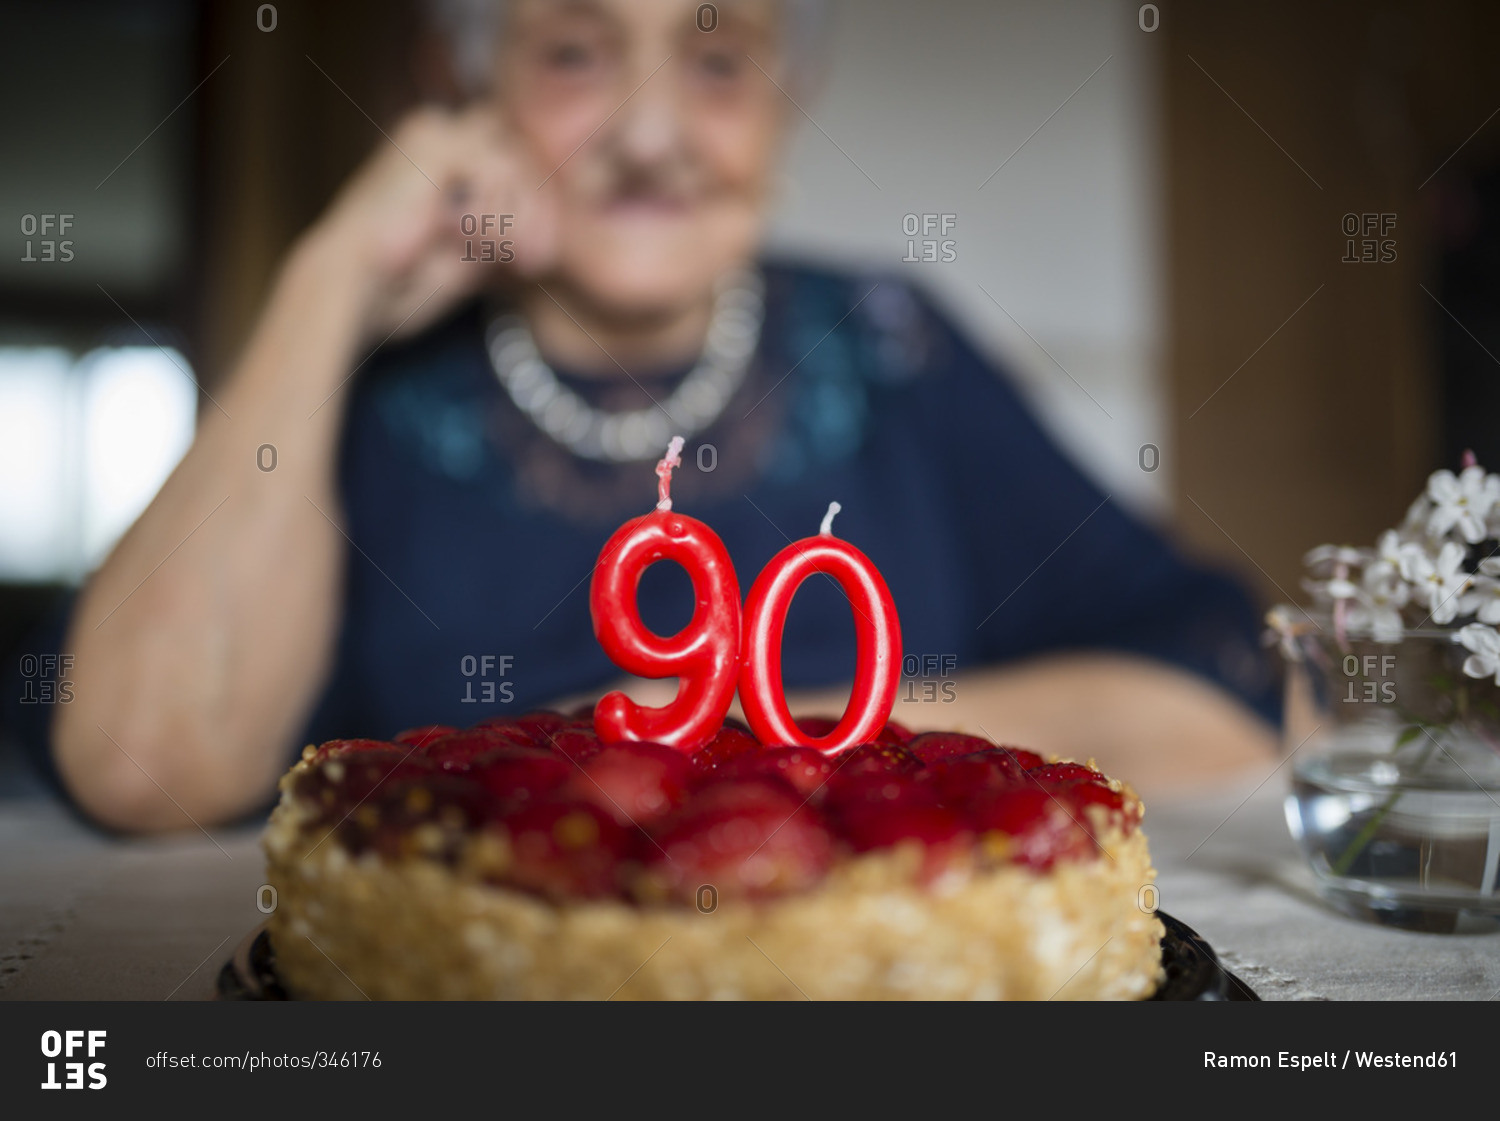 Candles on a birthday cake of a senior woman celebrating her ninetieth birthday